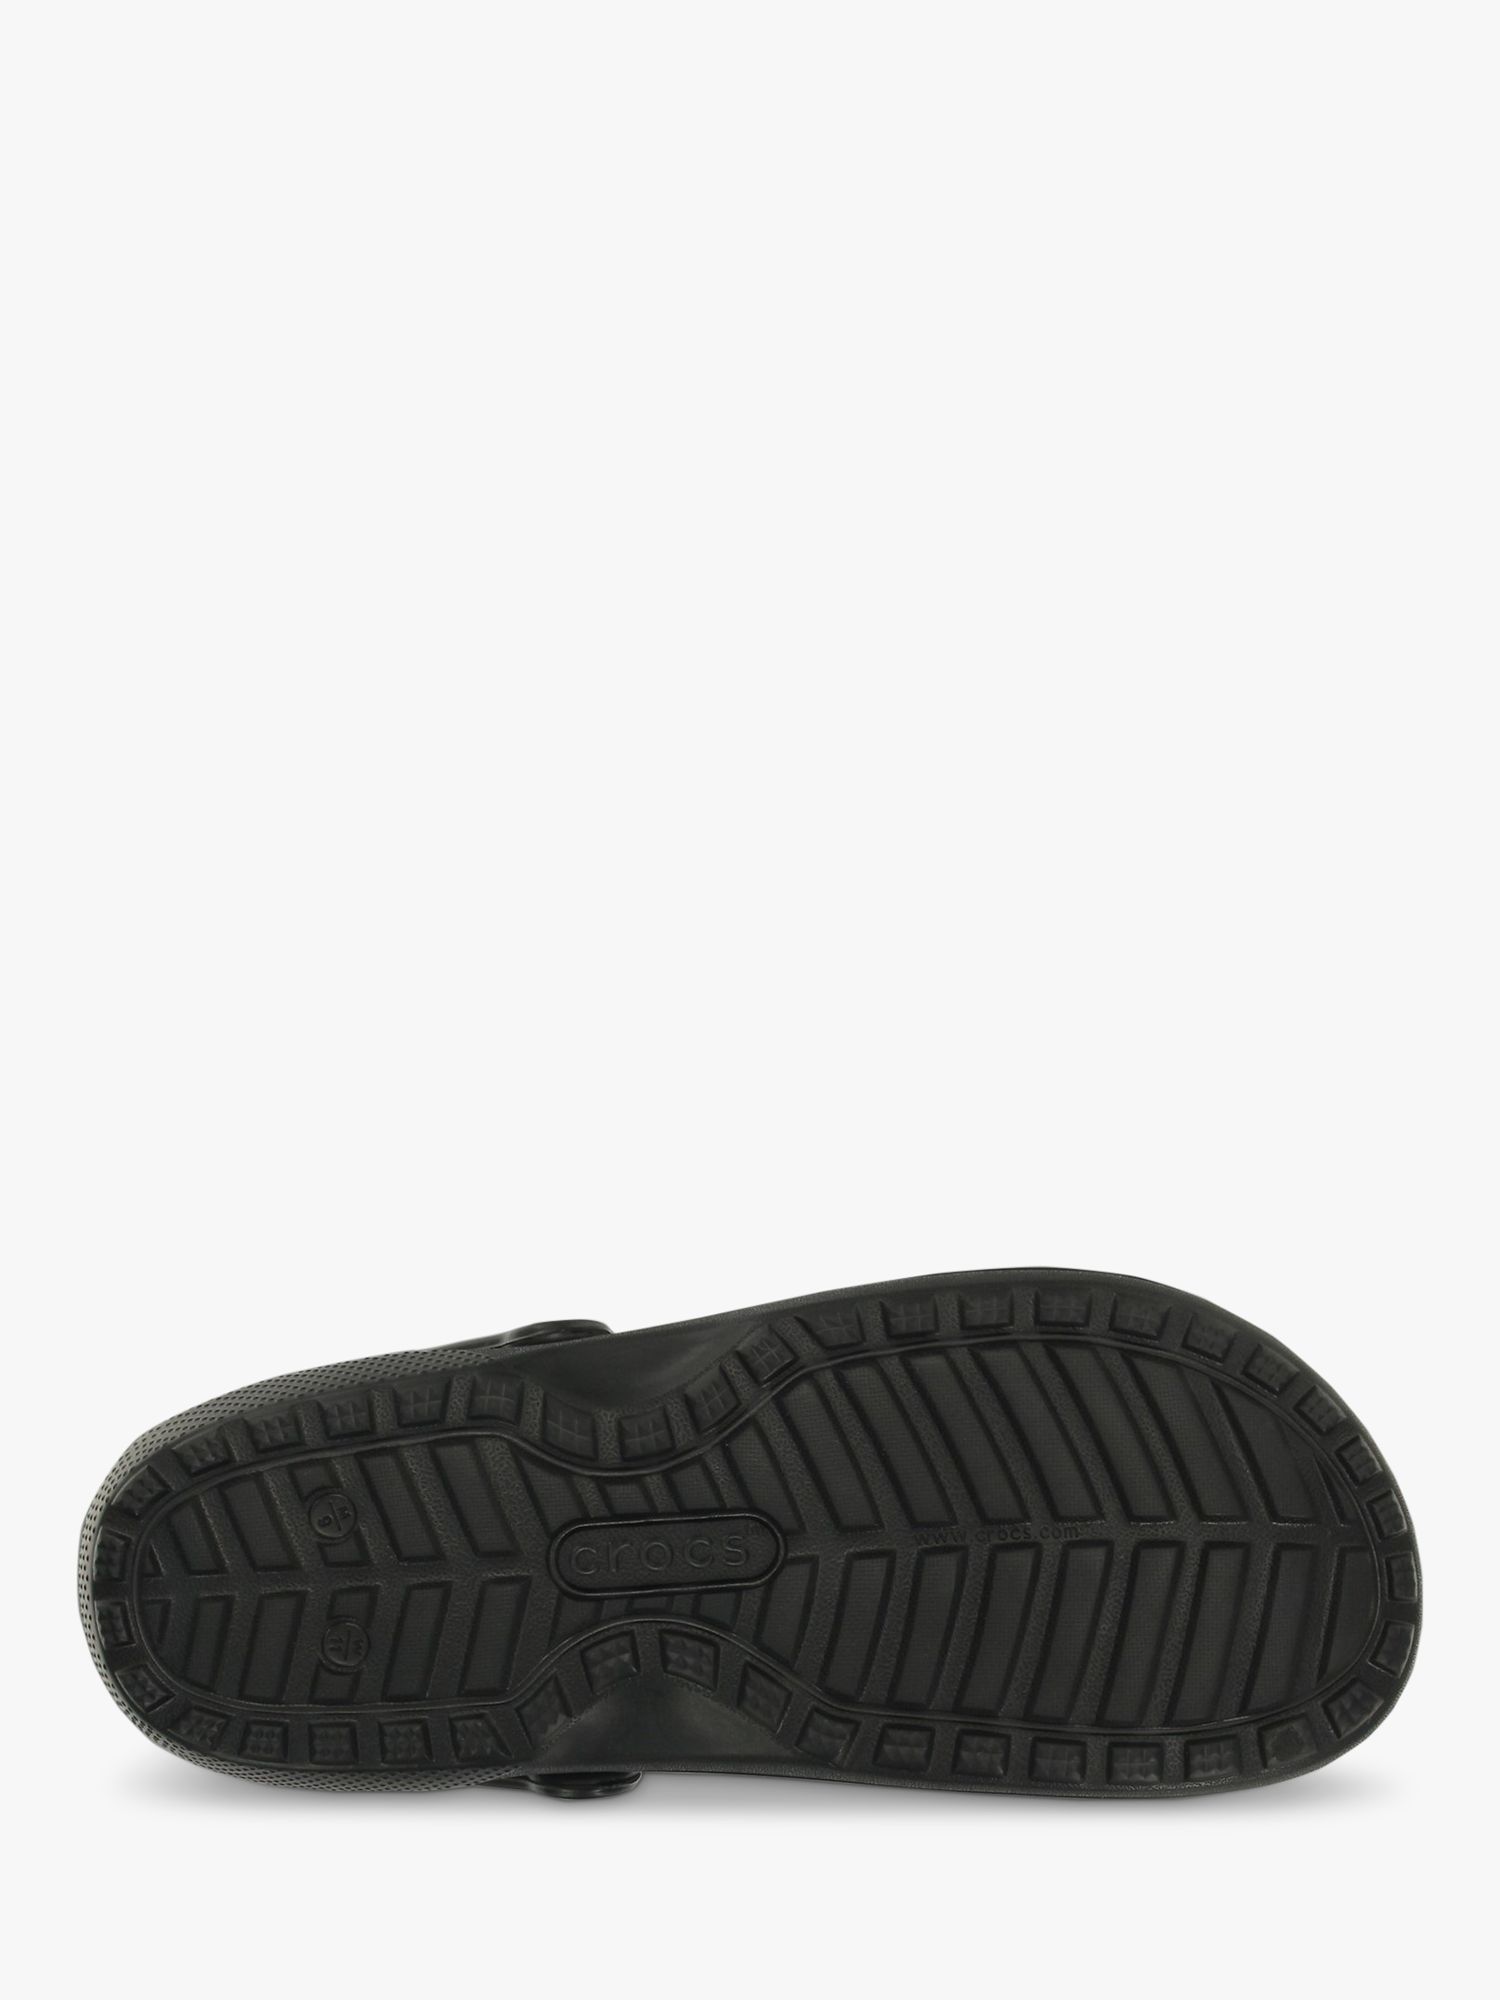 Crocs Classic Lined Clogs, Black, 4